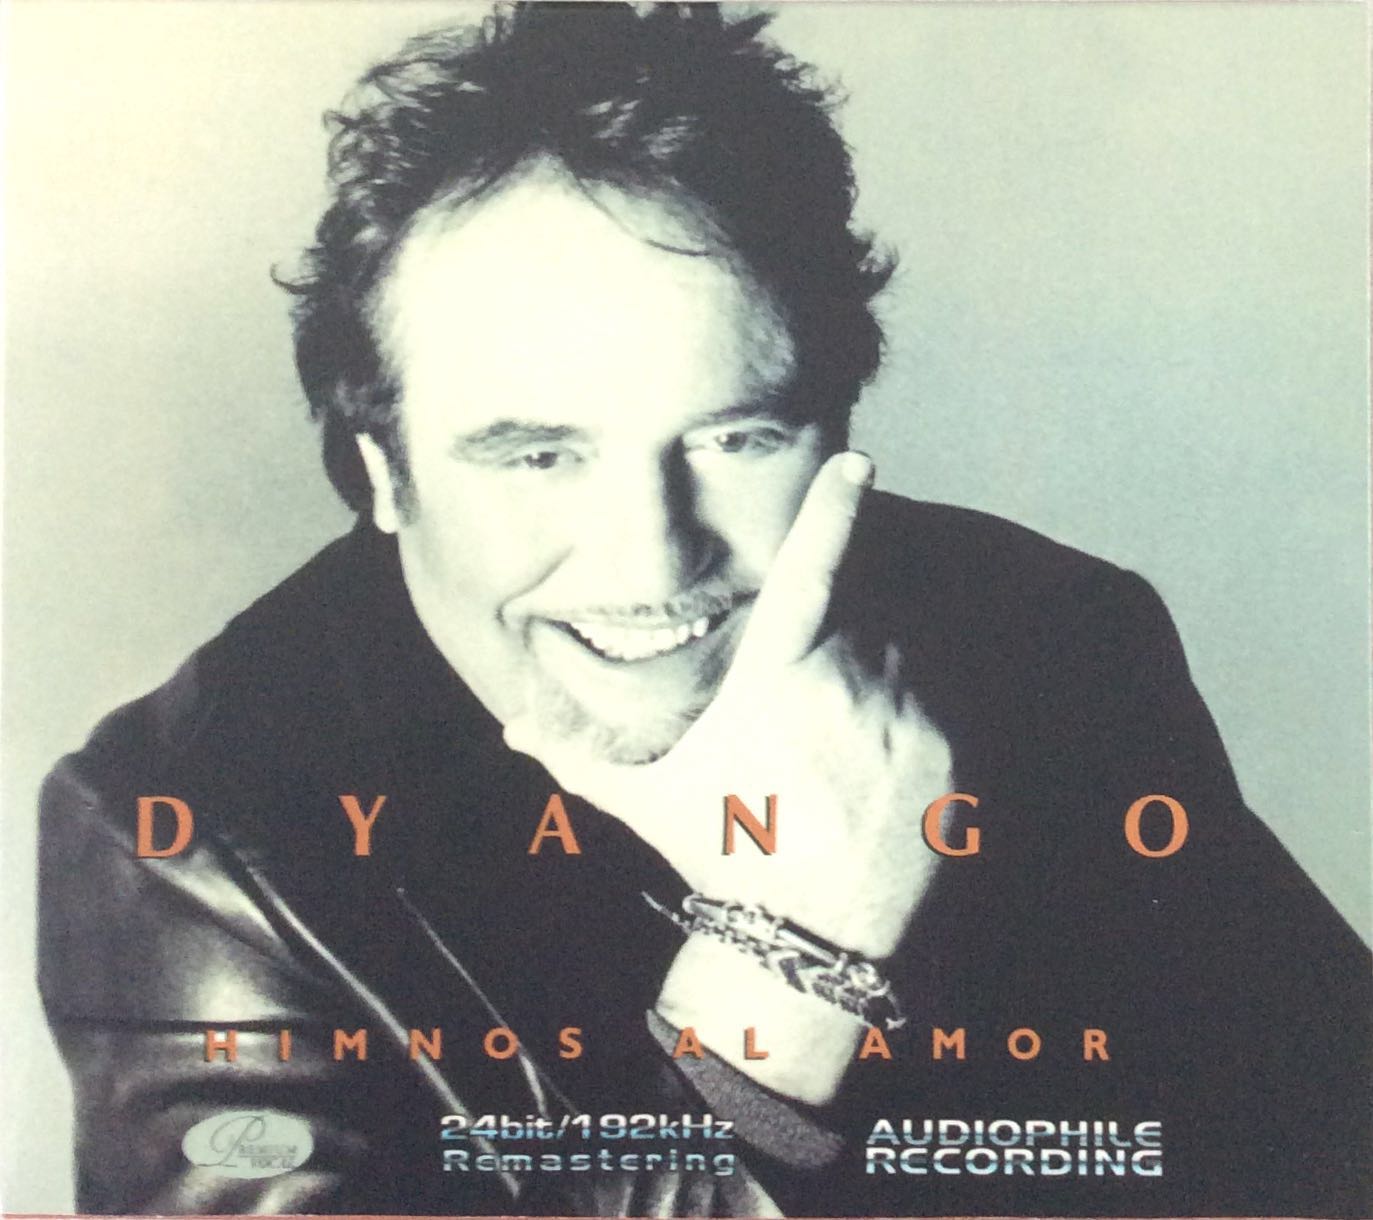 Dyango - HIMNOS AL AMOR 24bit 192kHz Remastering Audiophile CD